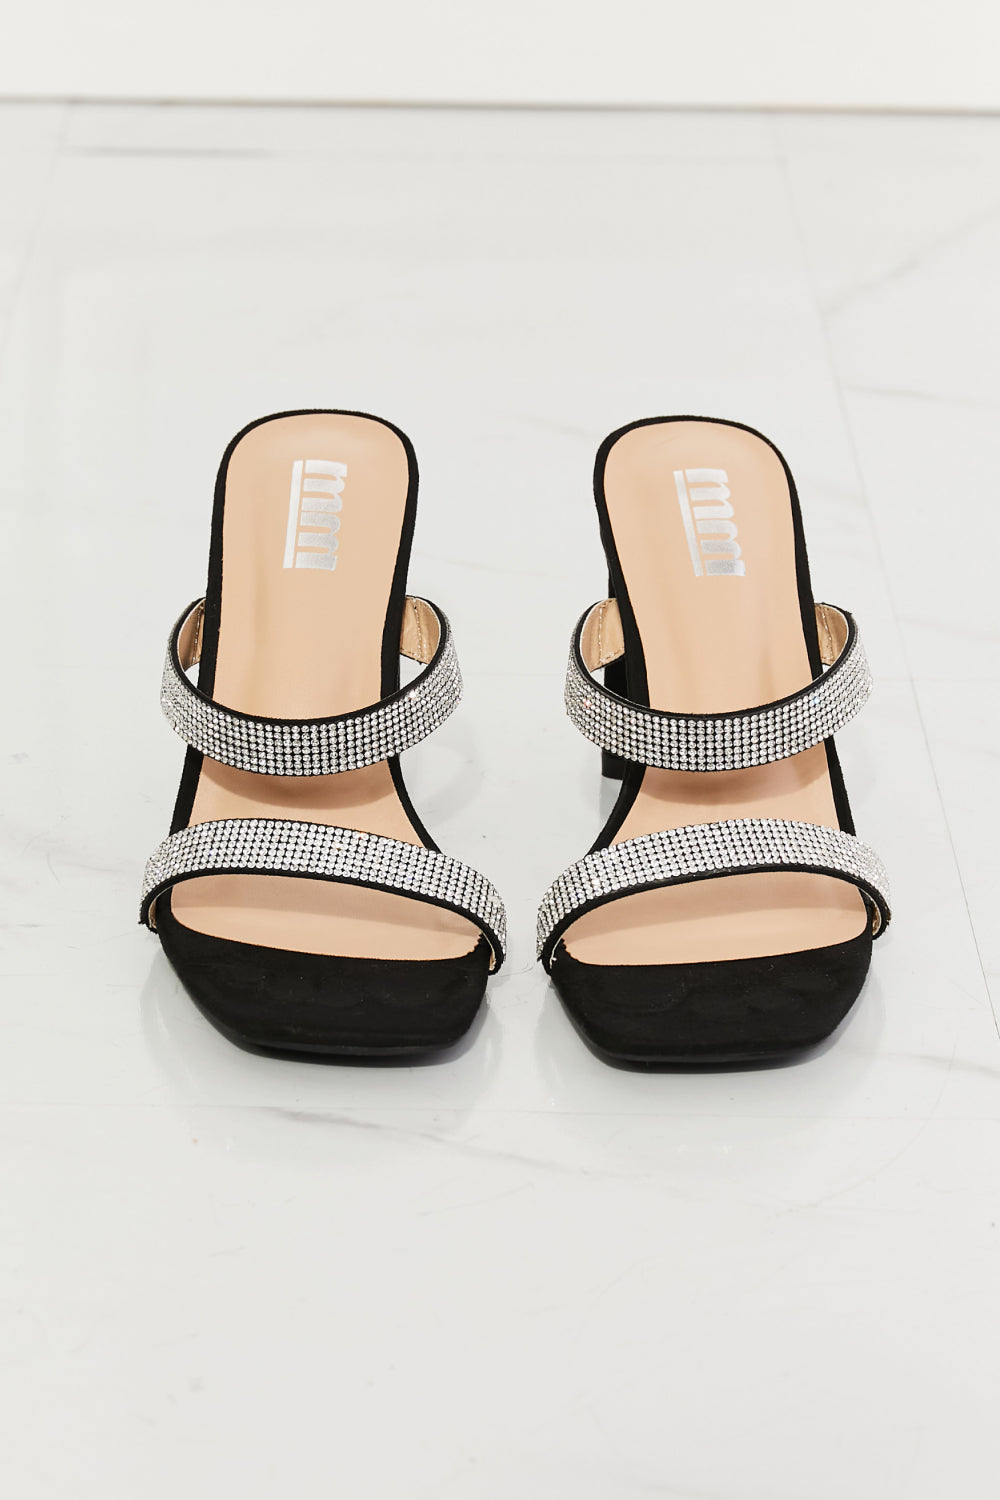 MMShoes Leave A Little Sparkle Rhinestone Block Heel Sandal in Black - nailedmoms